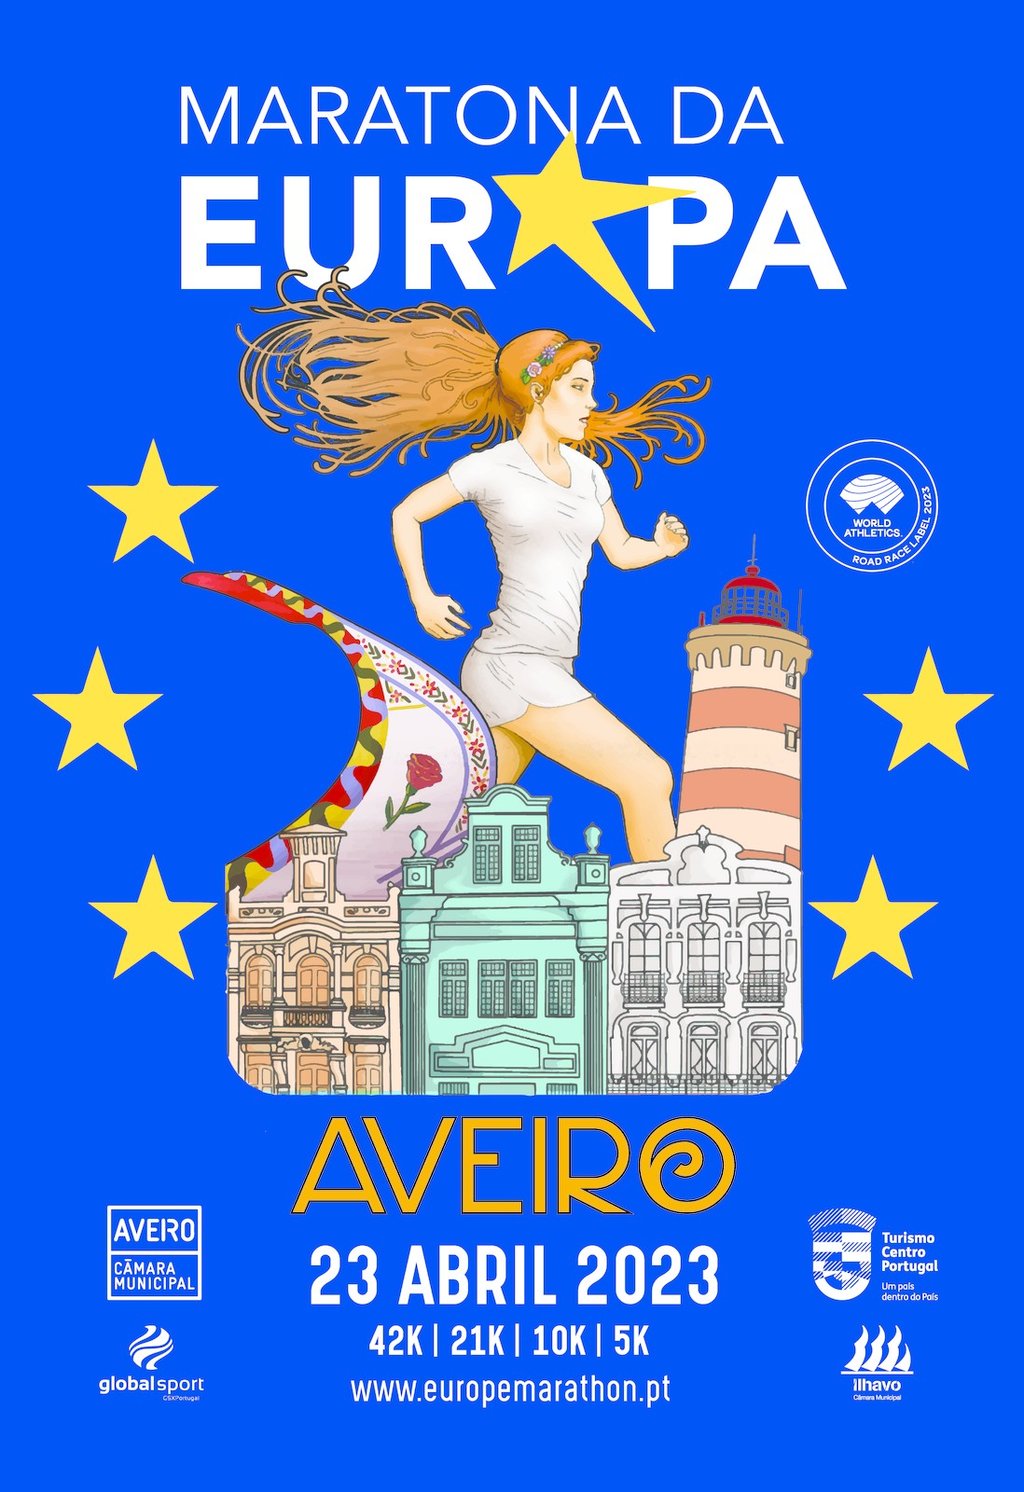 Maratona da Europa 2023 – Condicionamentos de trânsito